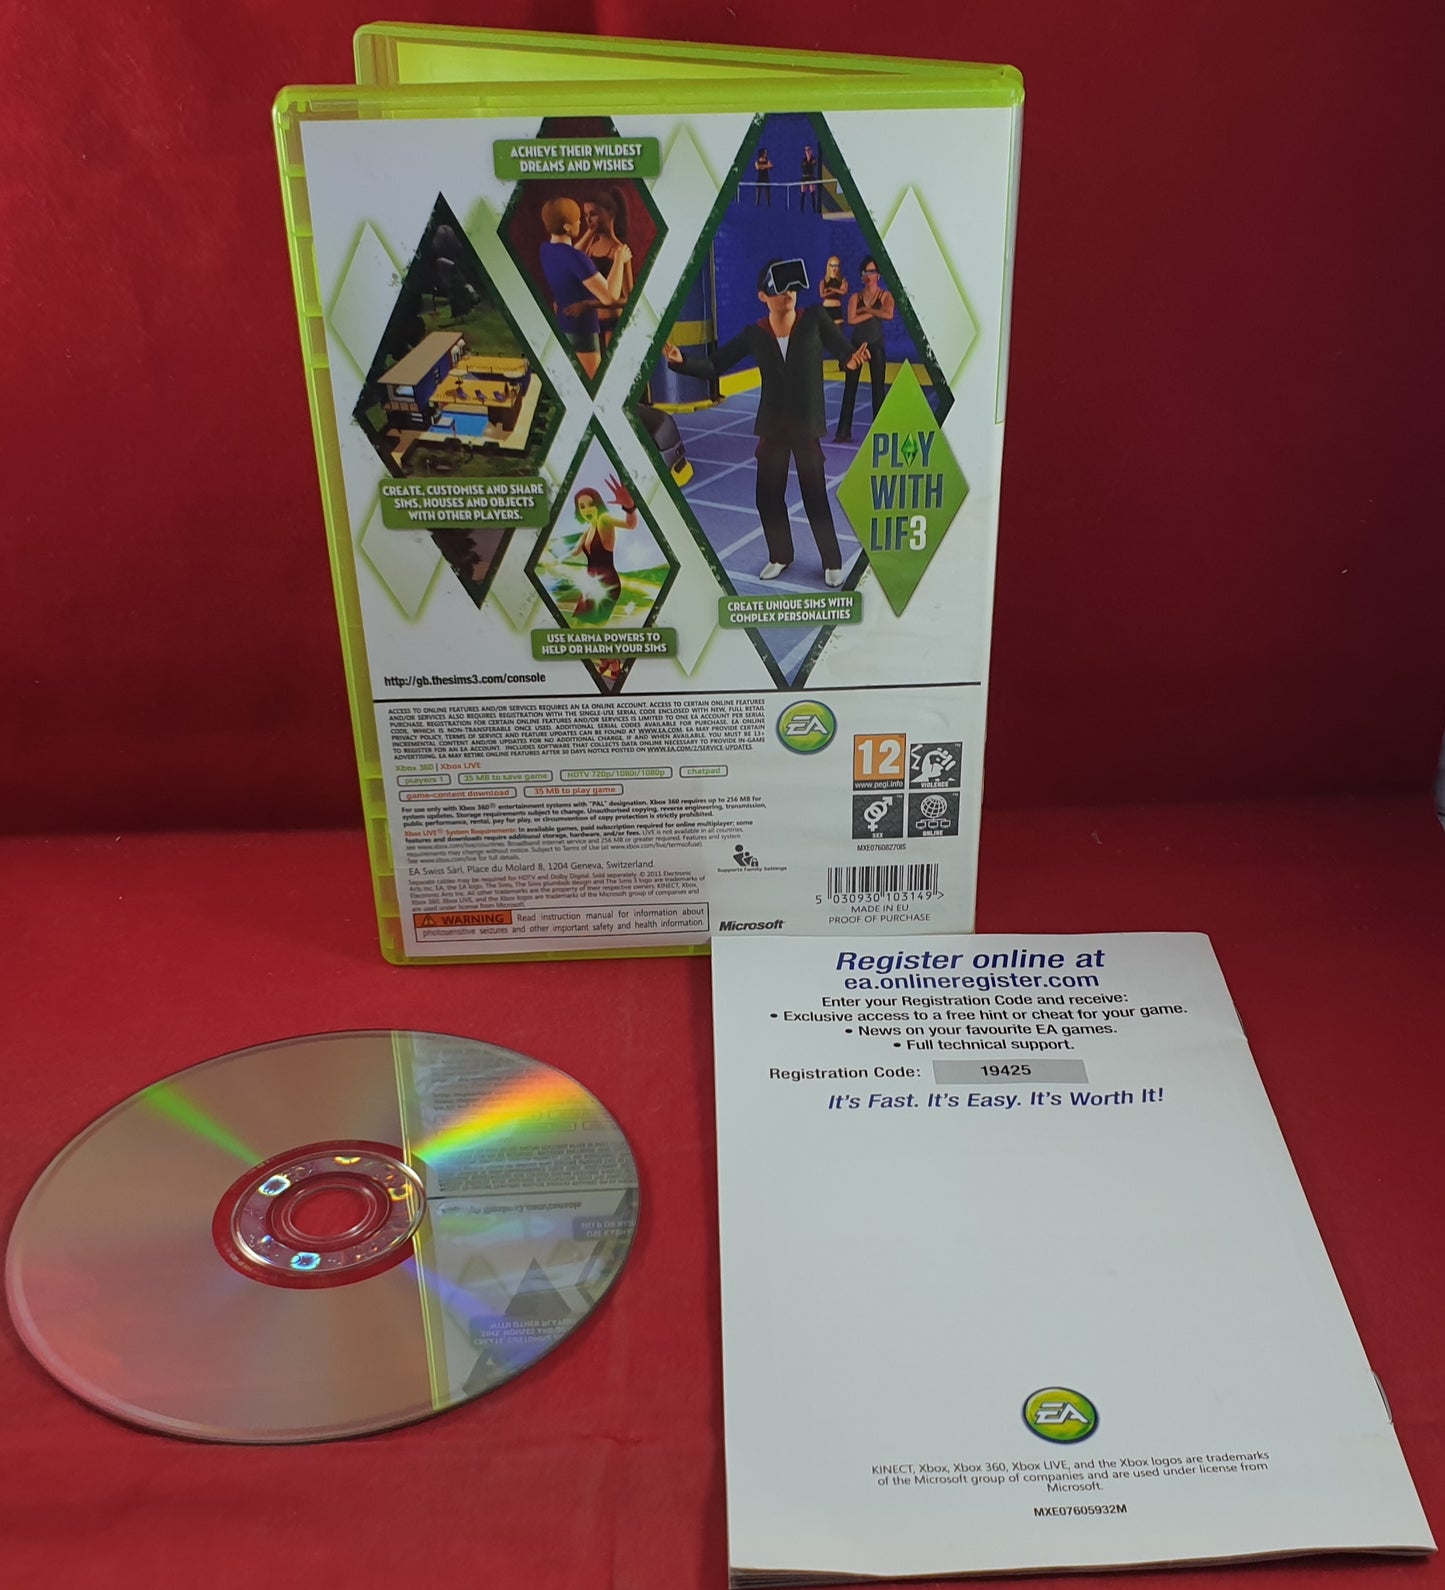 The Sims 3 Microsoft Xbox 360 Game